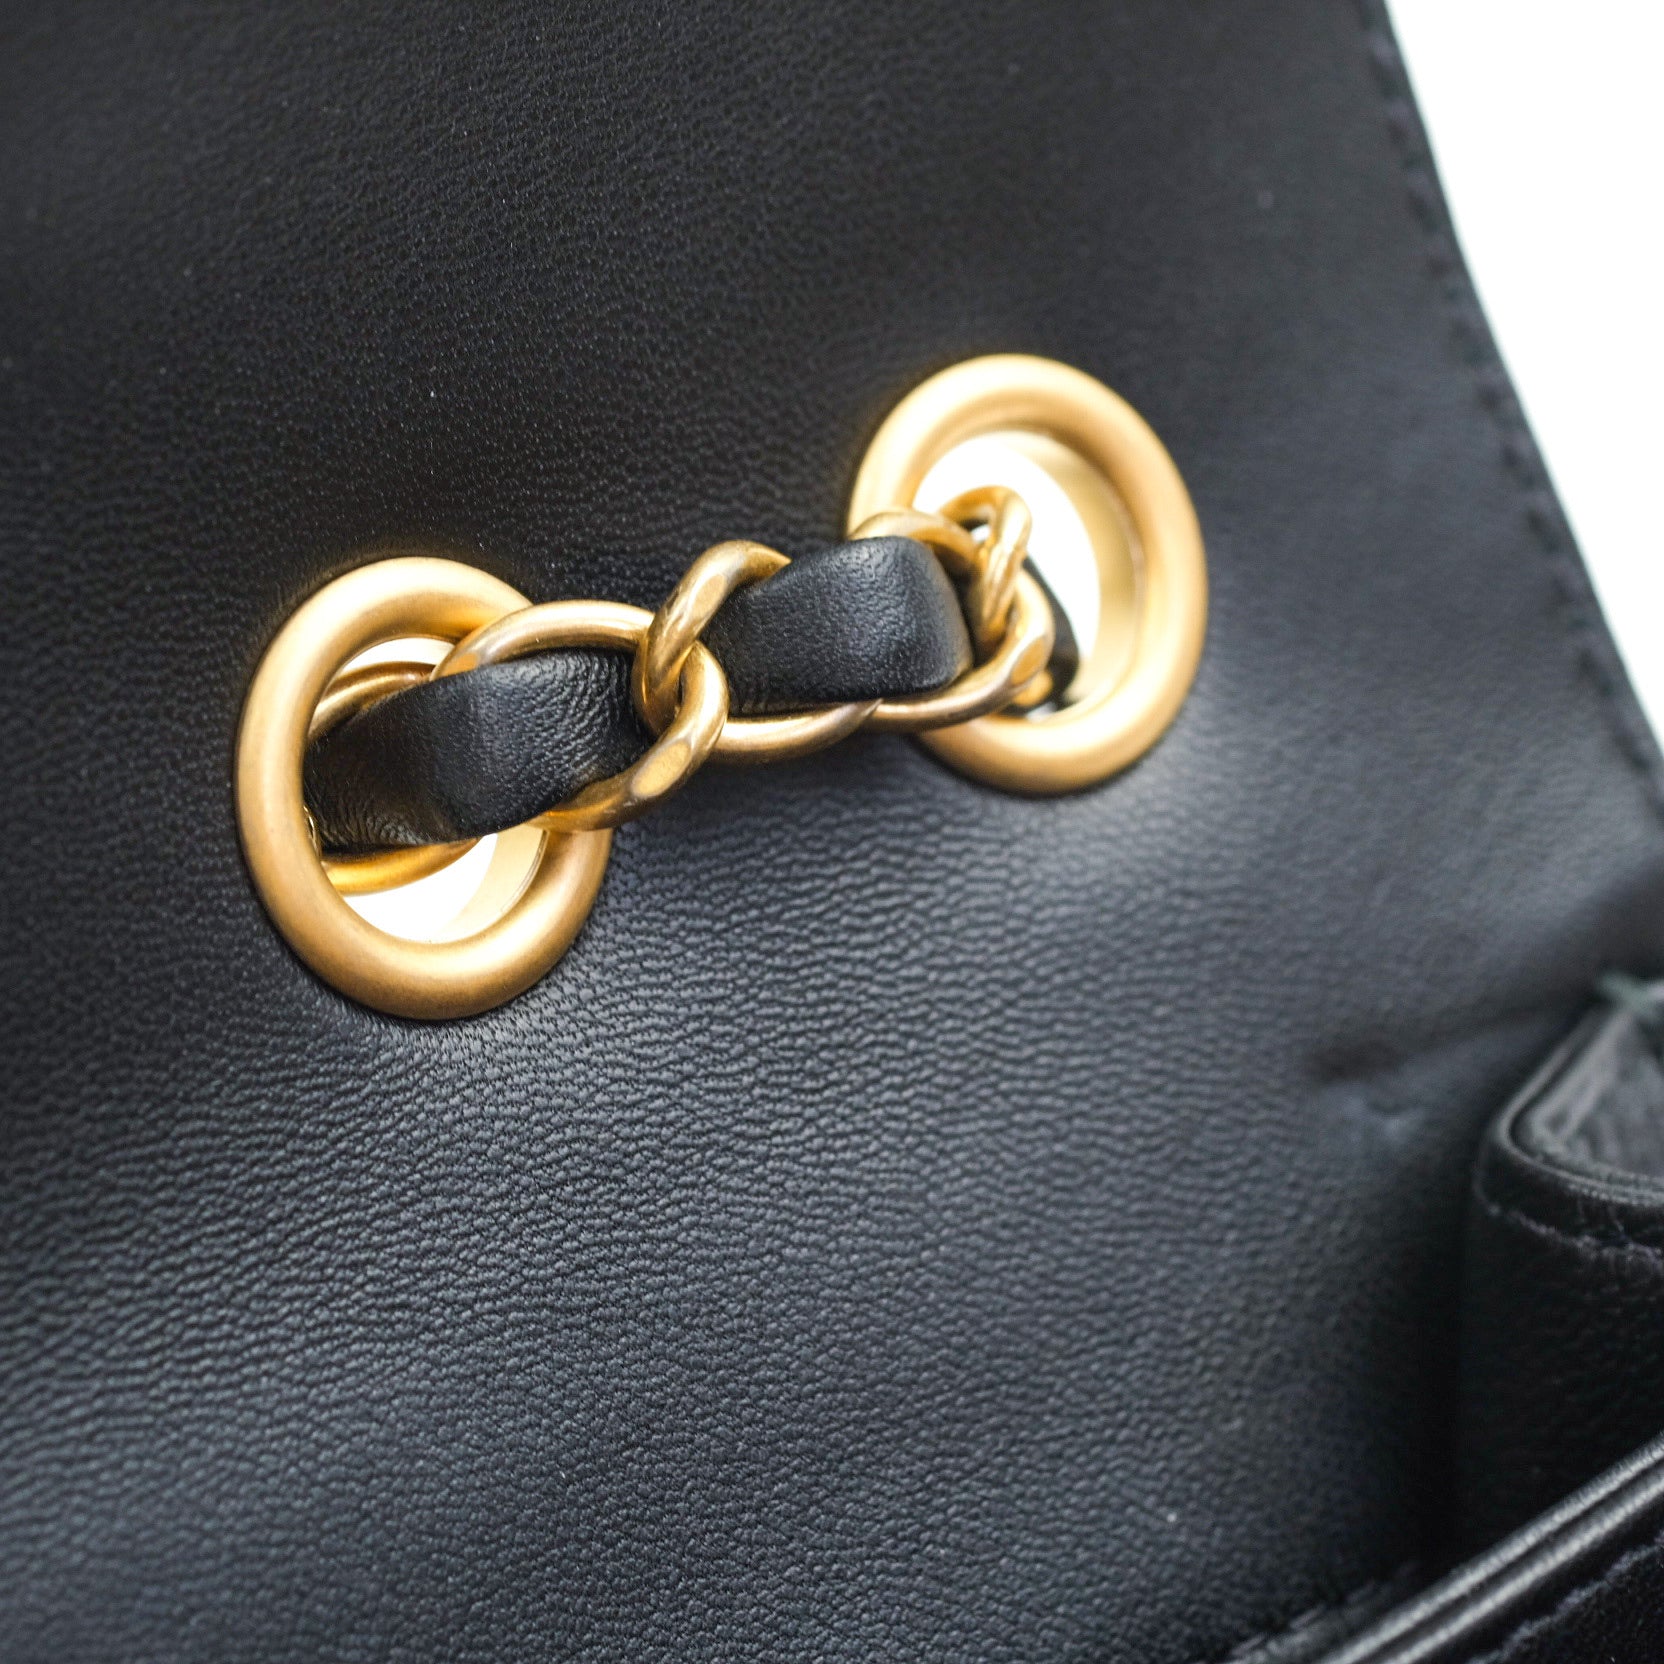 Chanel Coco Vintage Flap Bag Black Lambskin Gold Hardware 18C